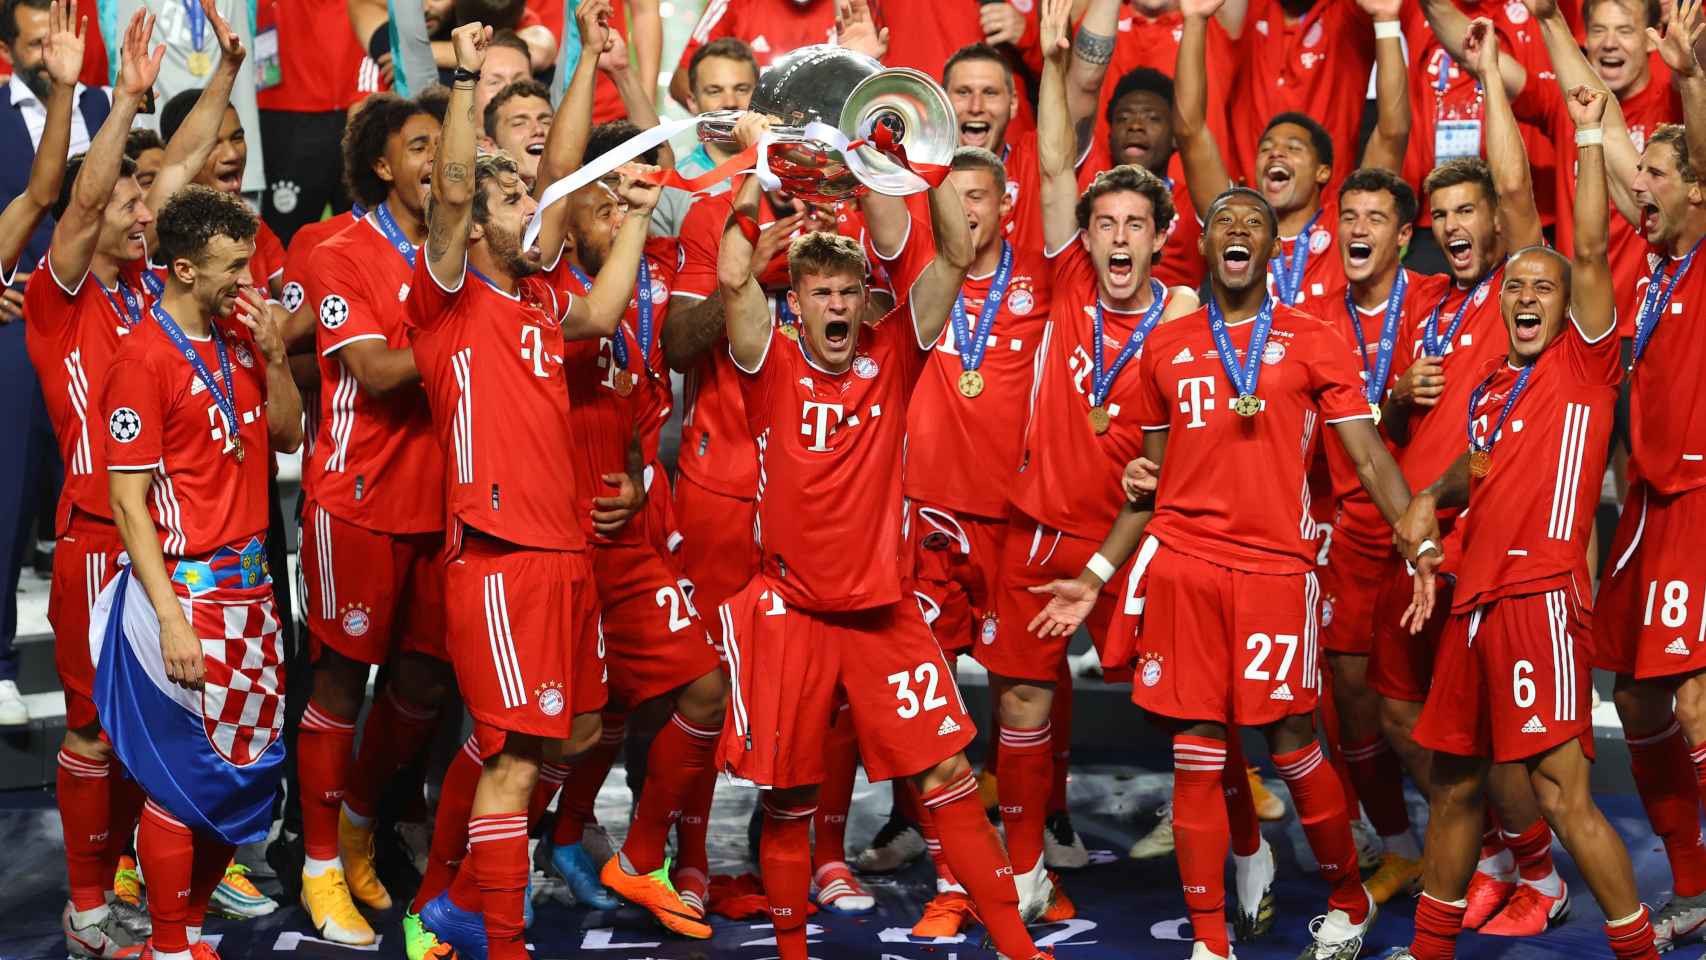 El Bayern alza la copa de la Champions League / EP